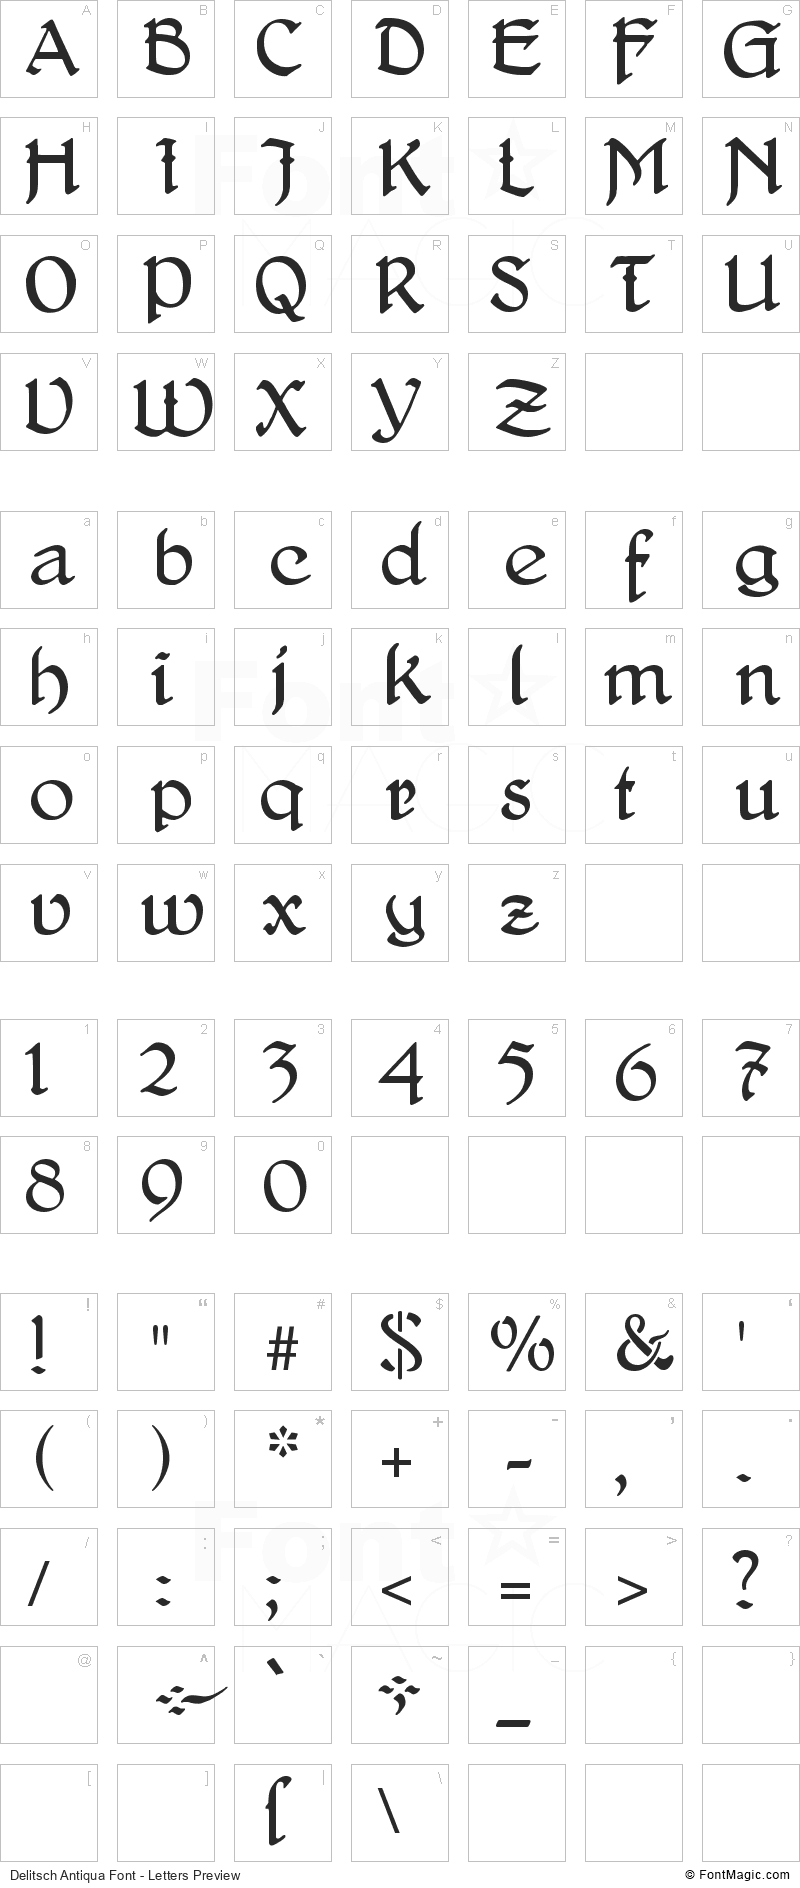 Delitsch Antiqua Font - All Latters Preview Chart